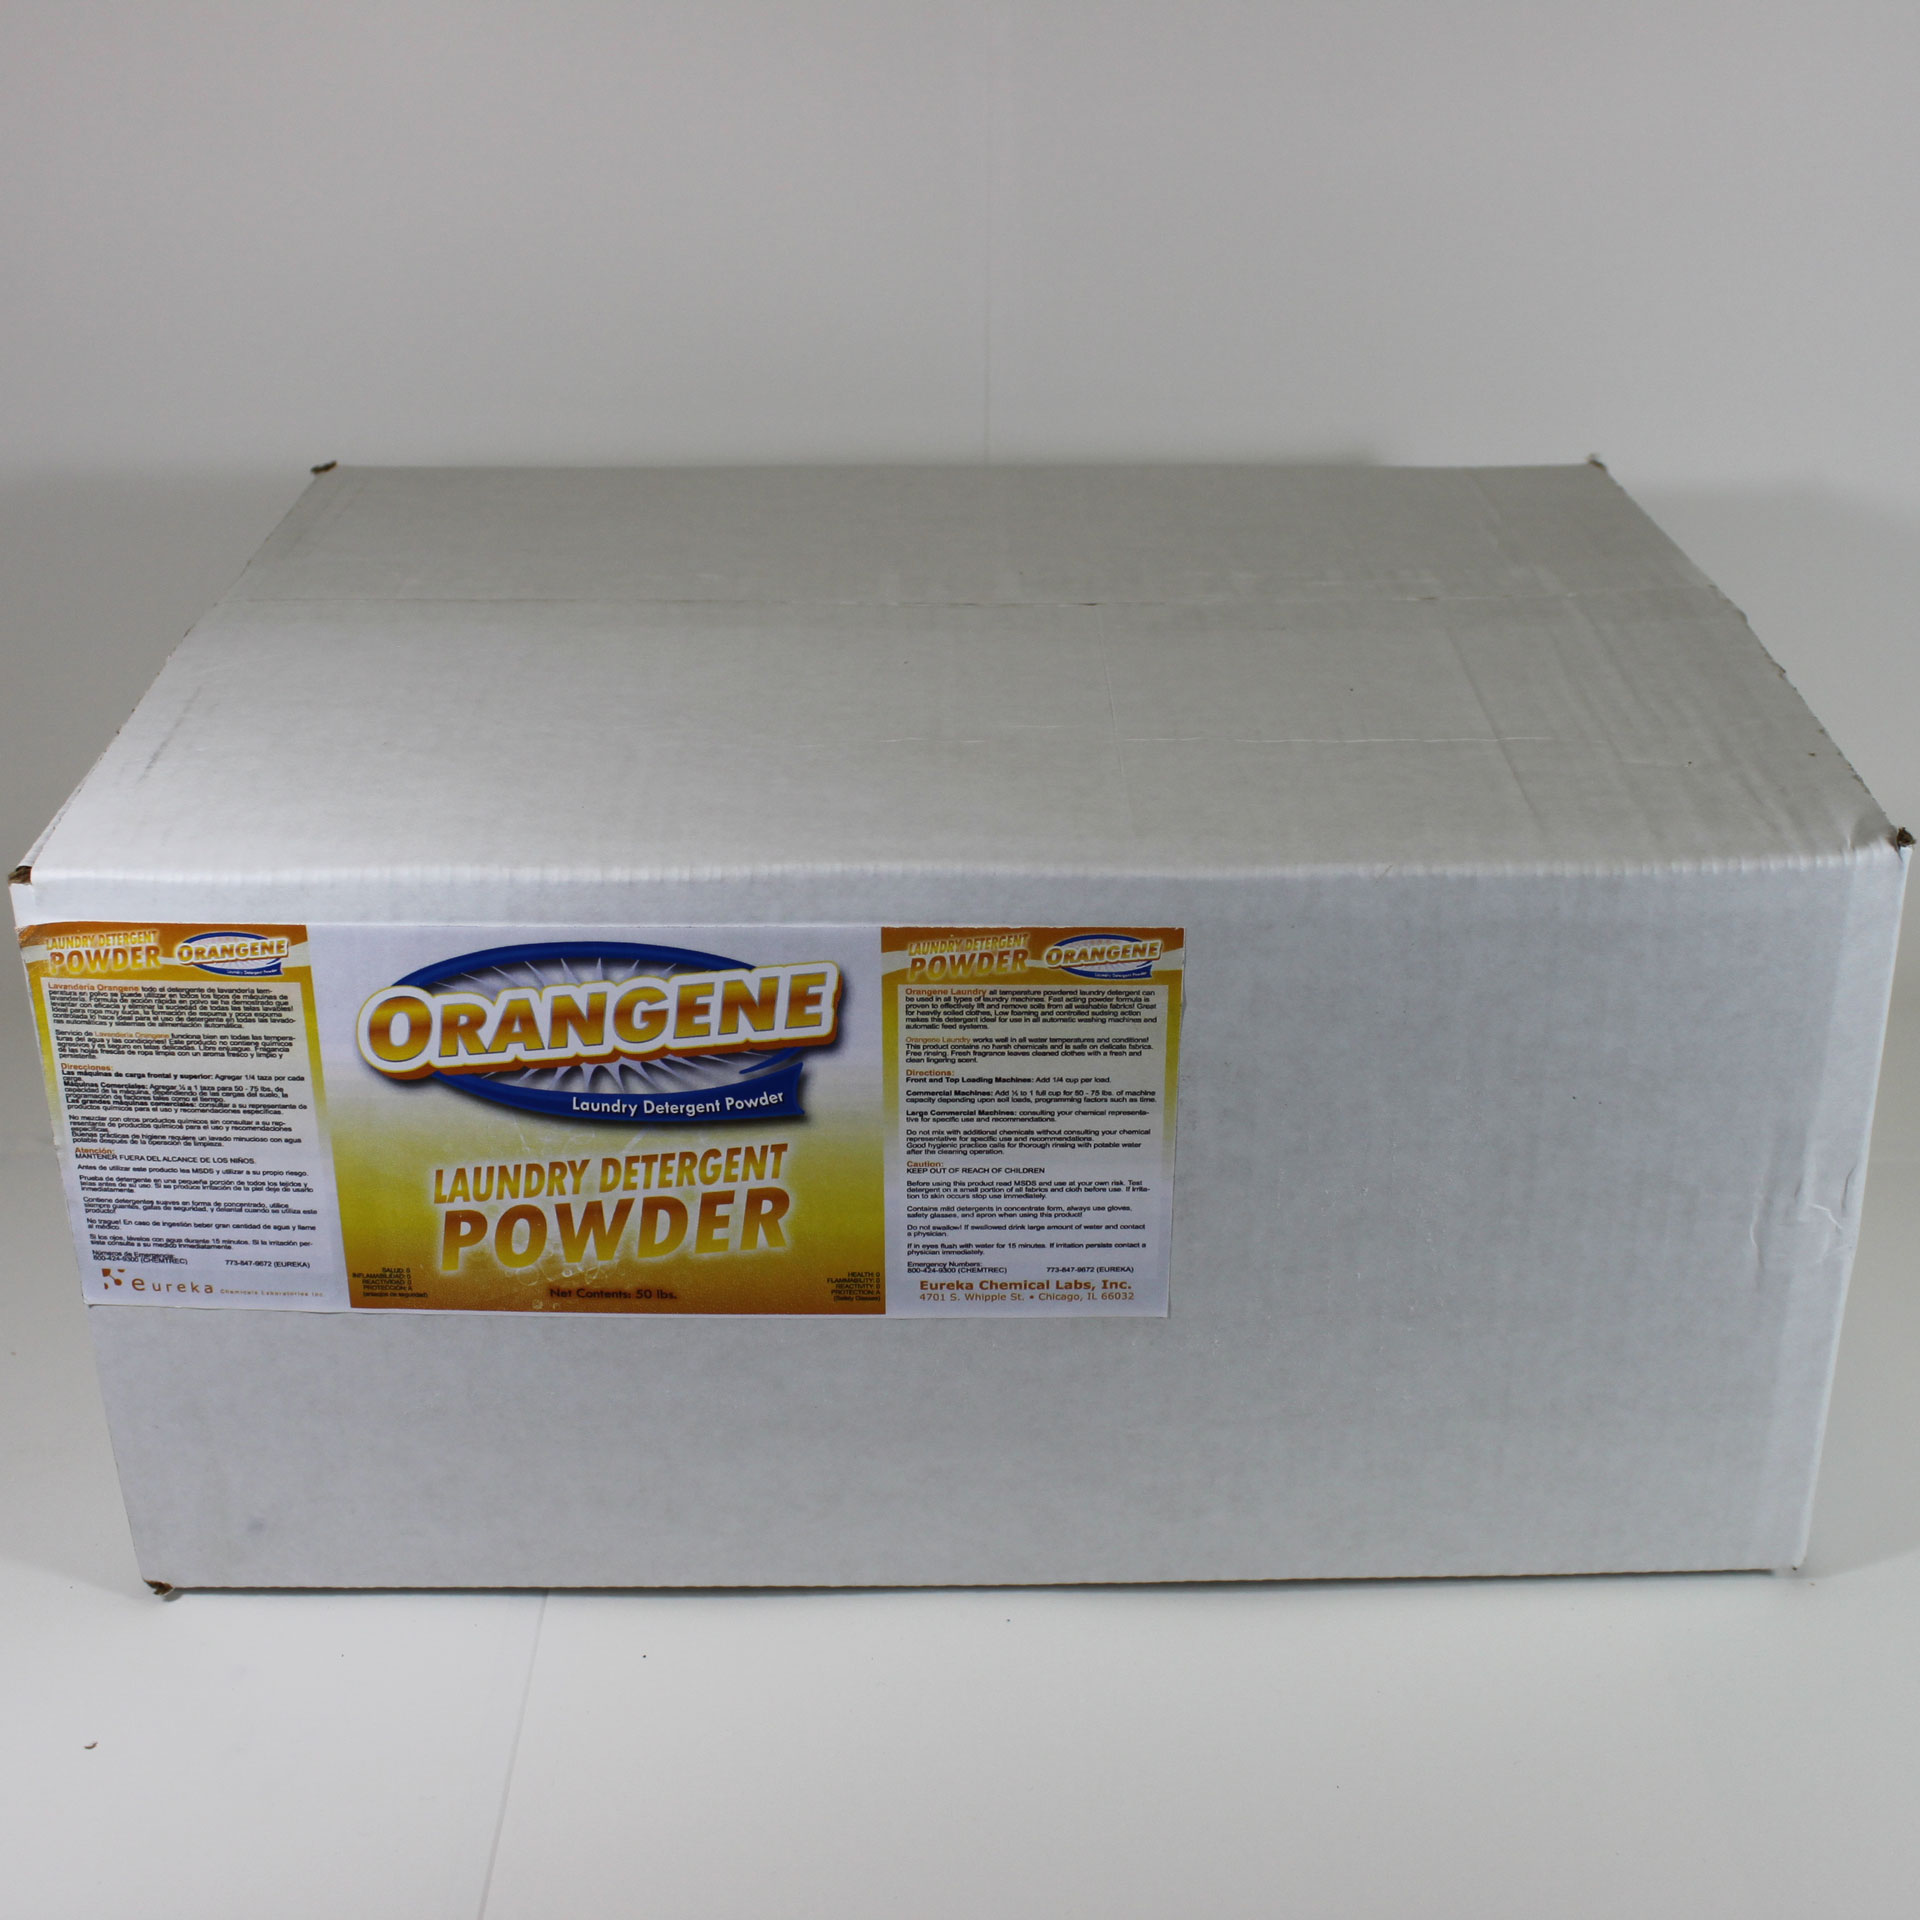 Box of Orangene laundry detergent powder.